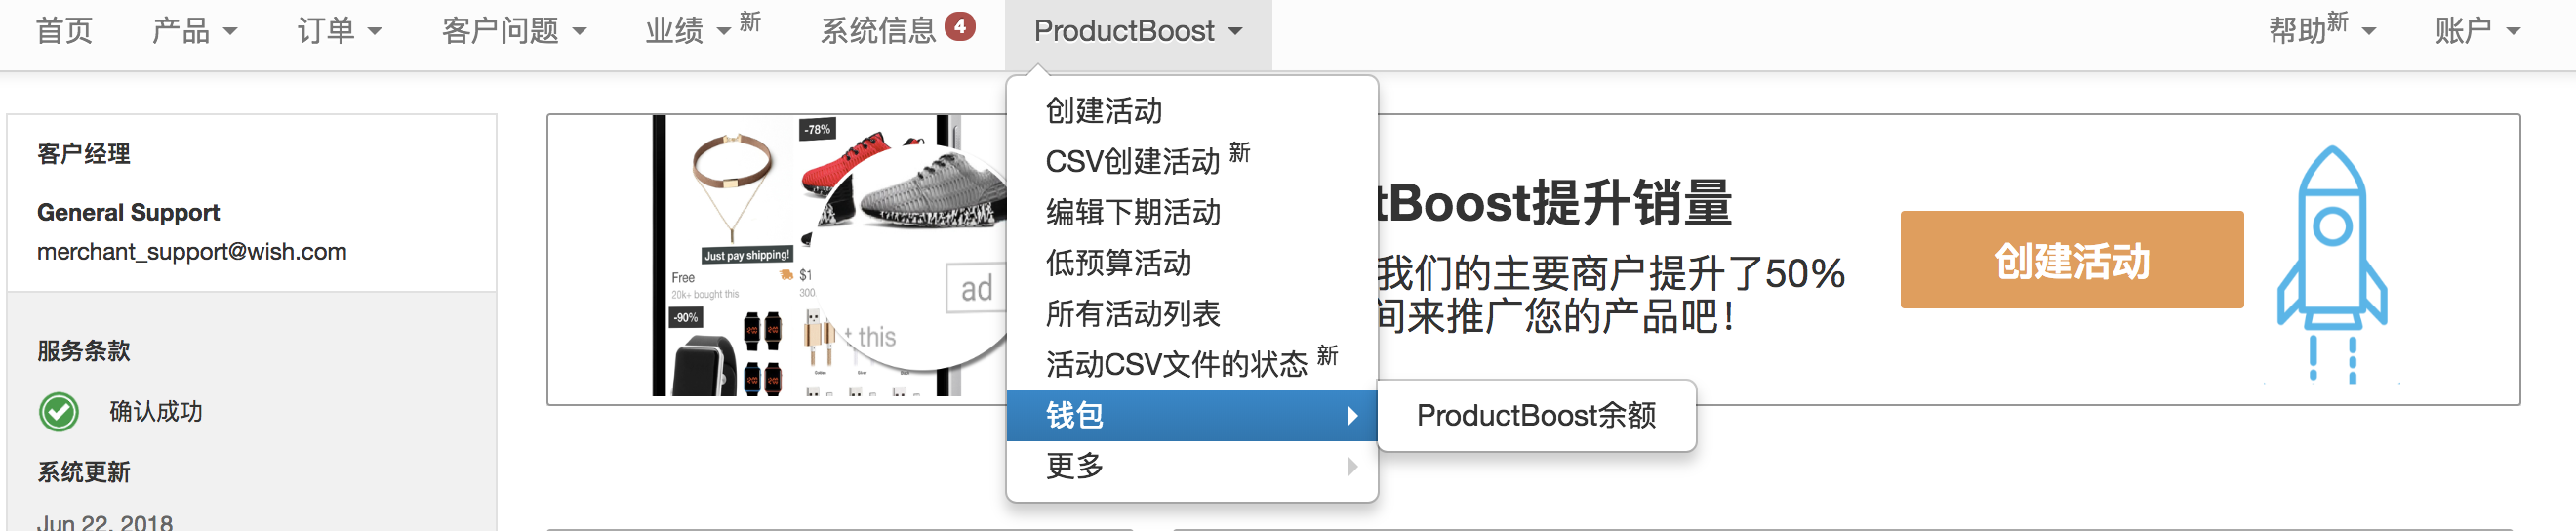 ProductBoost广告充值